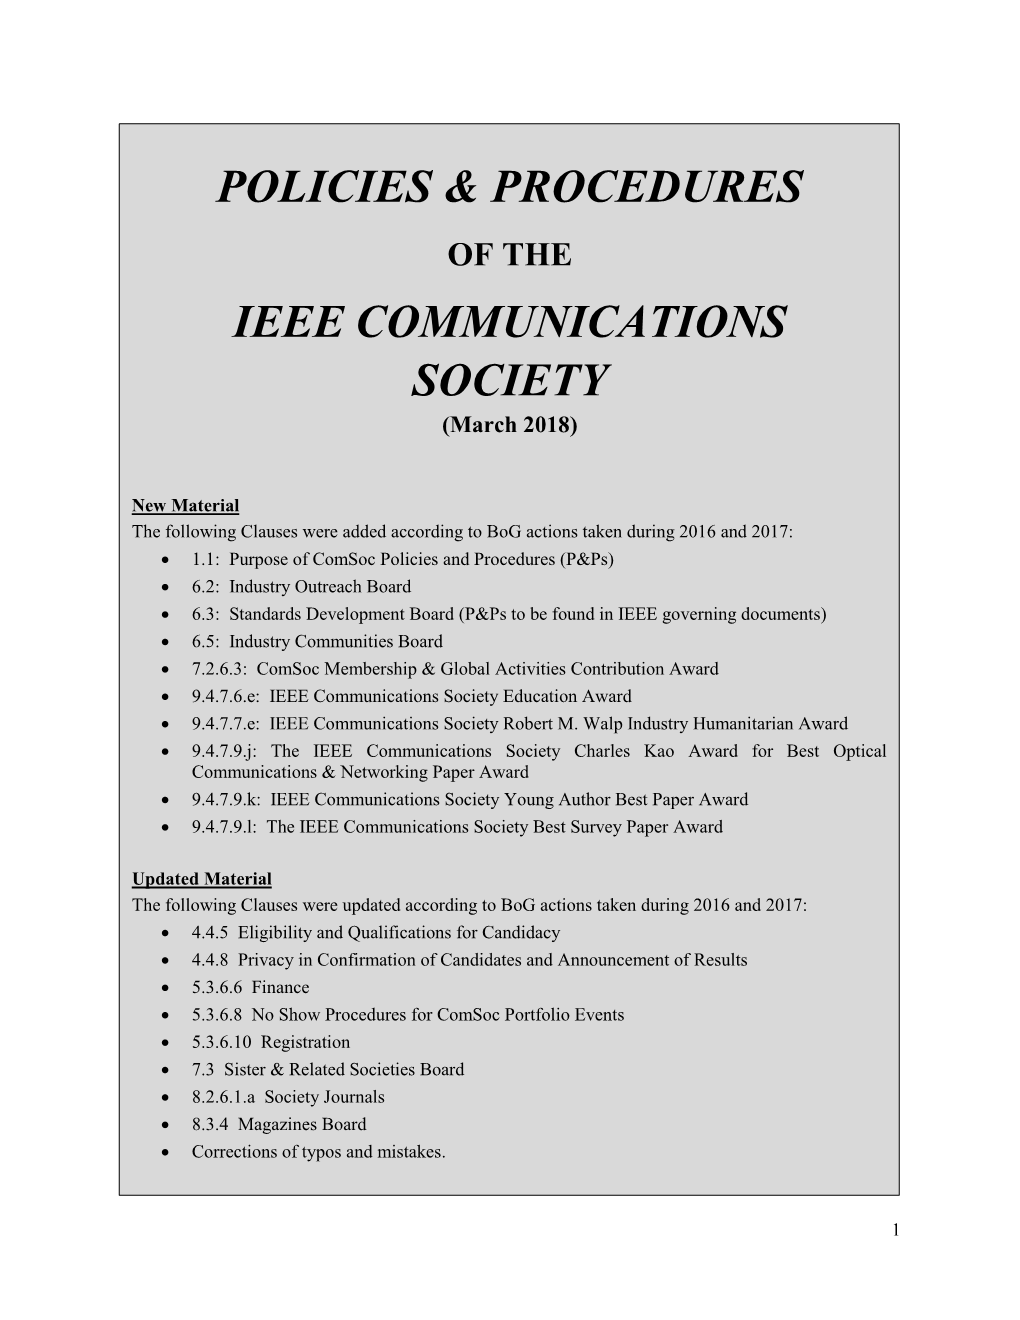 Policies & Procedures Ieee Communications Society